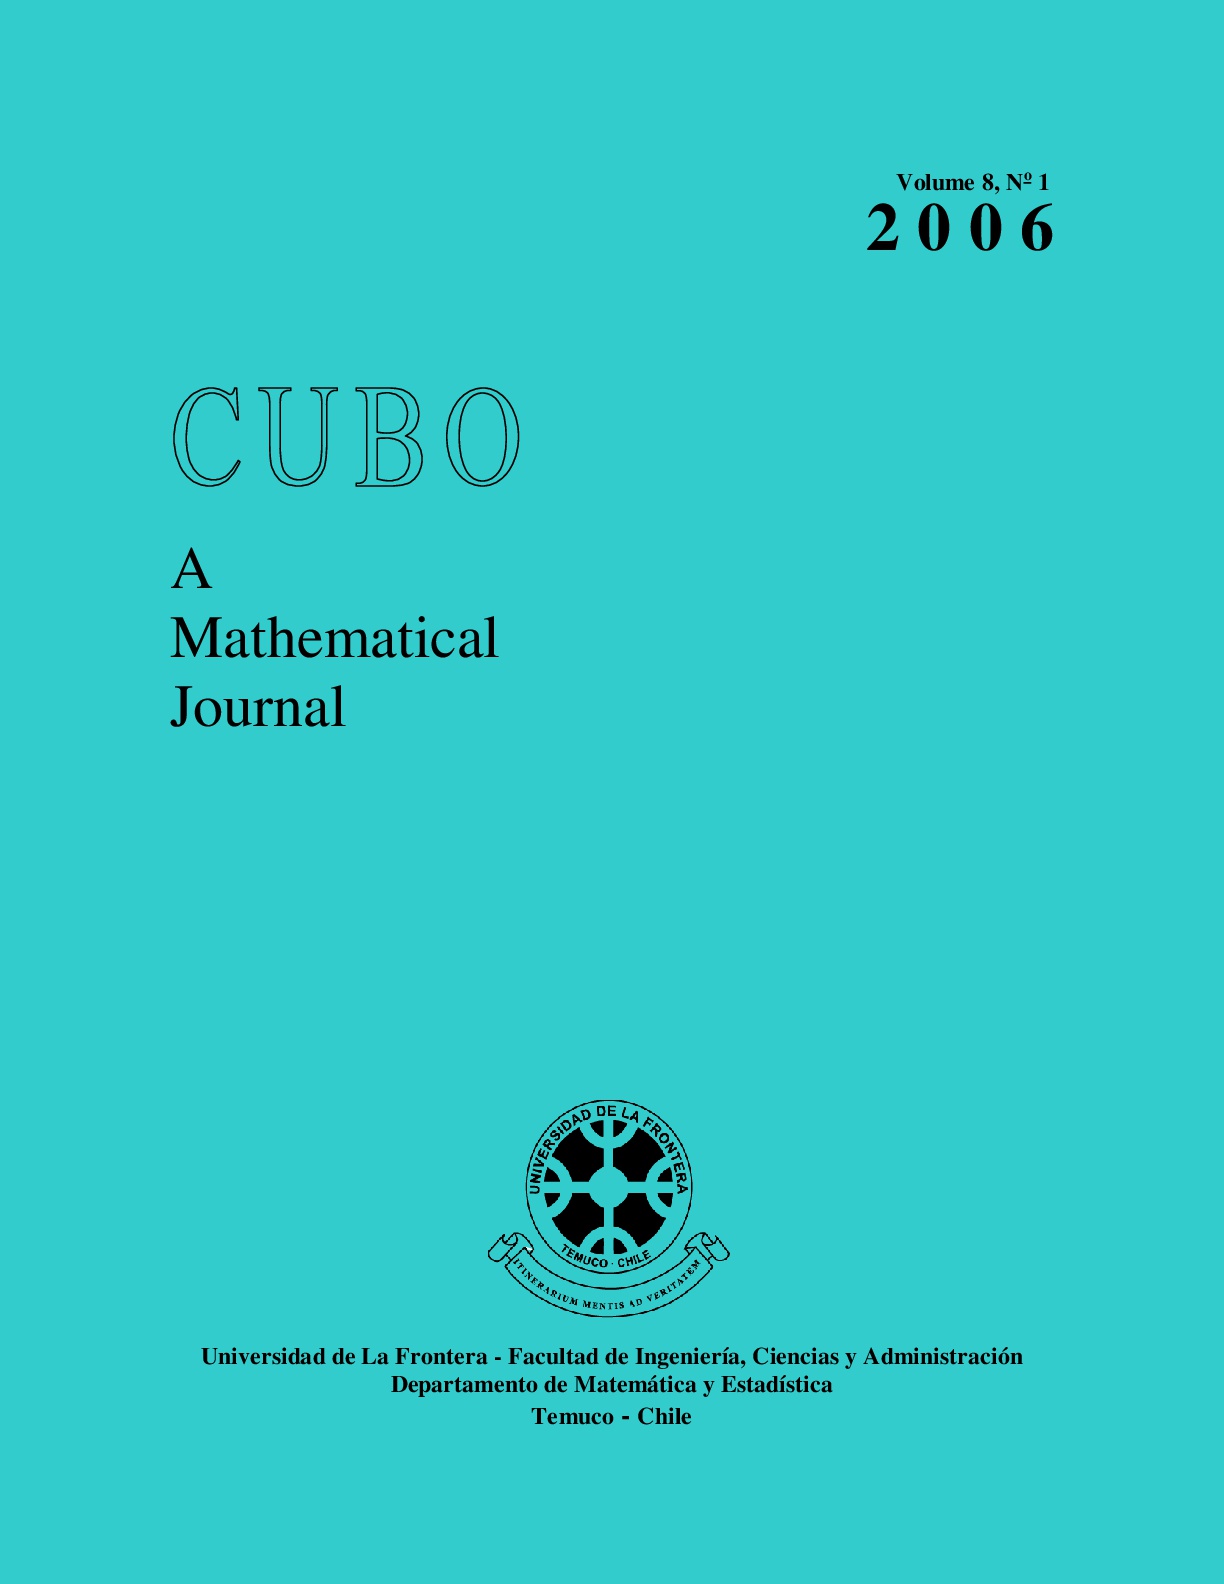 					View Vol. 8 No. 1 (2006): CUBO, A Mathematical Journal
				